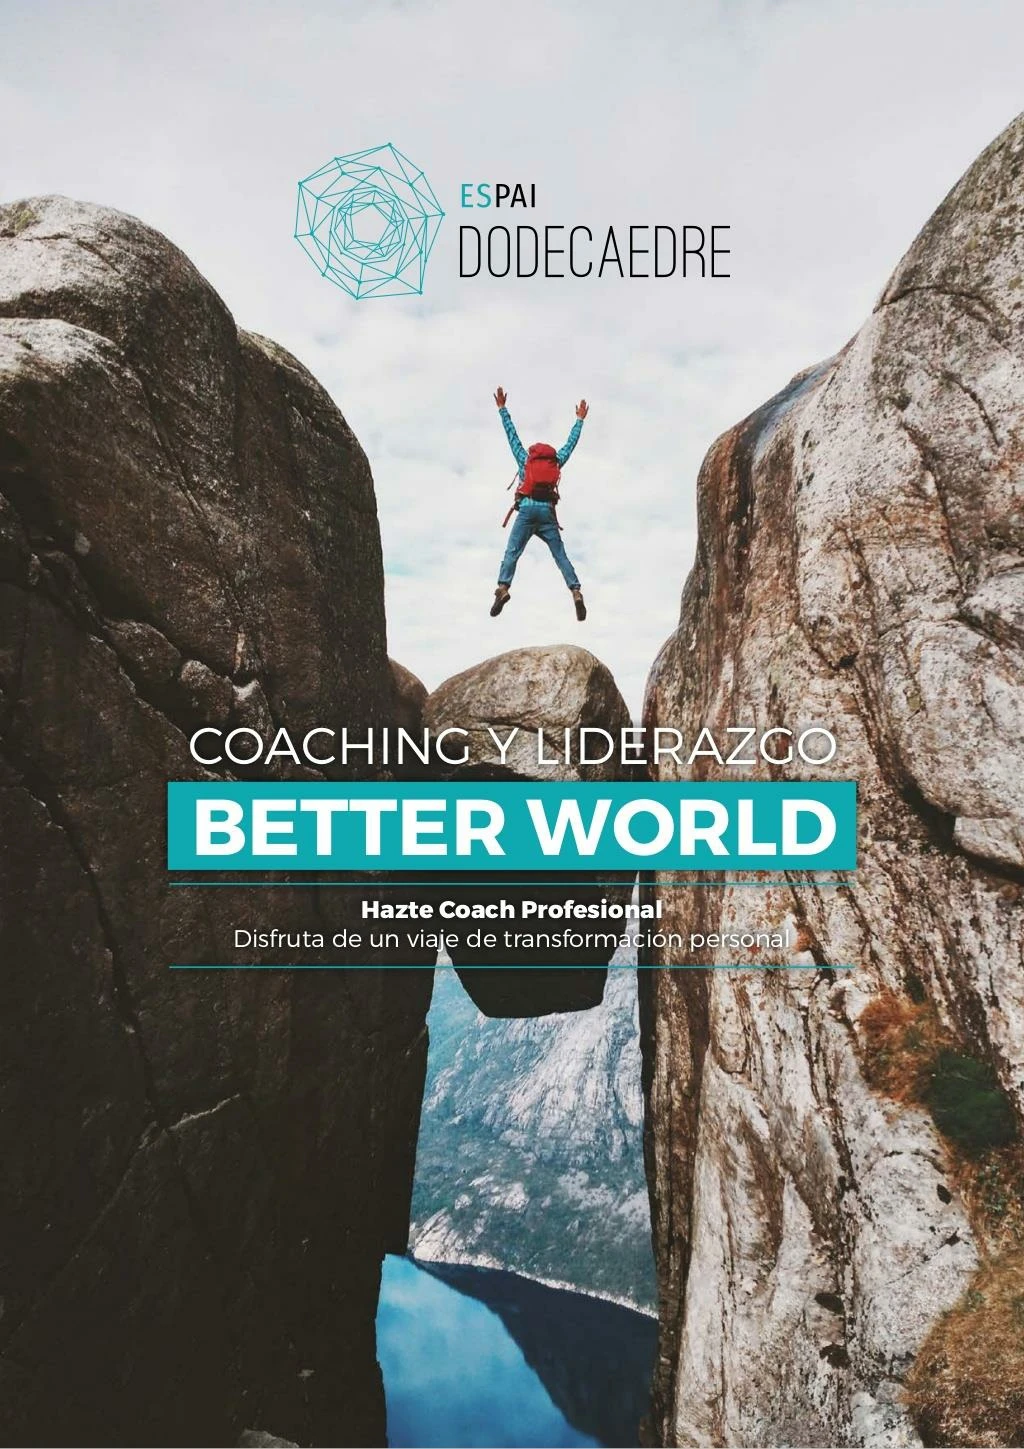 certificaci n de coaching y liderazgo better world triple certificaci n